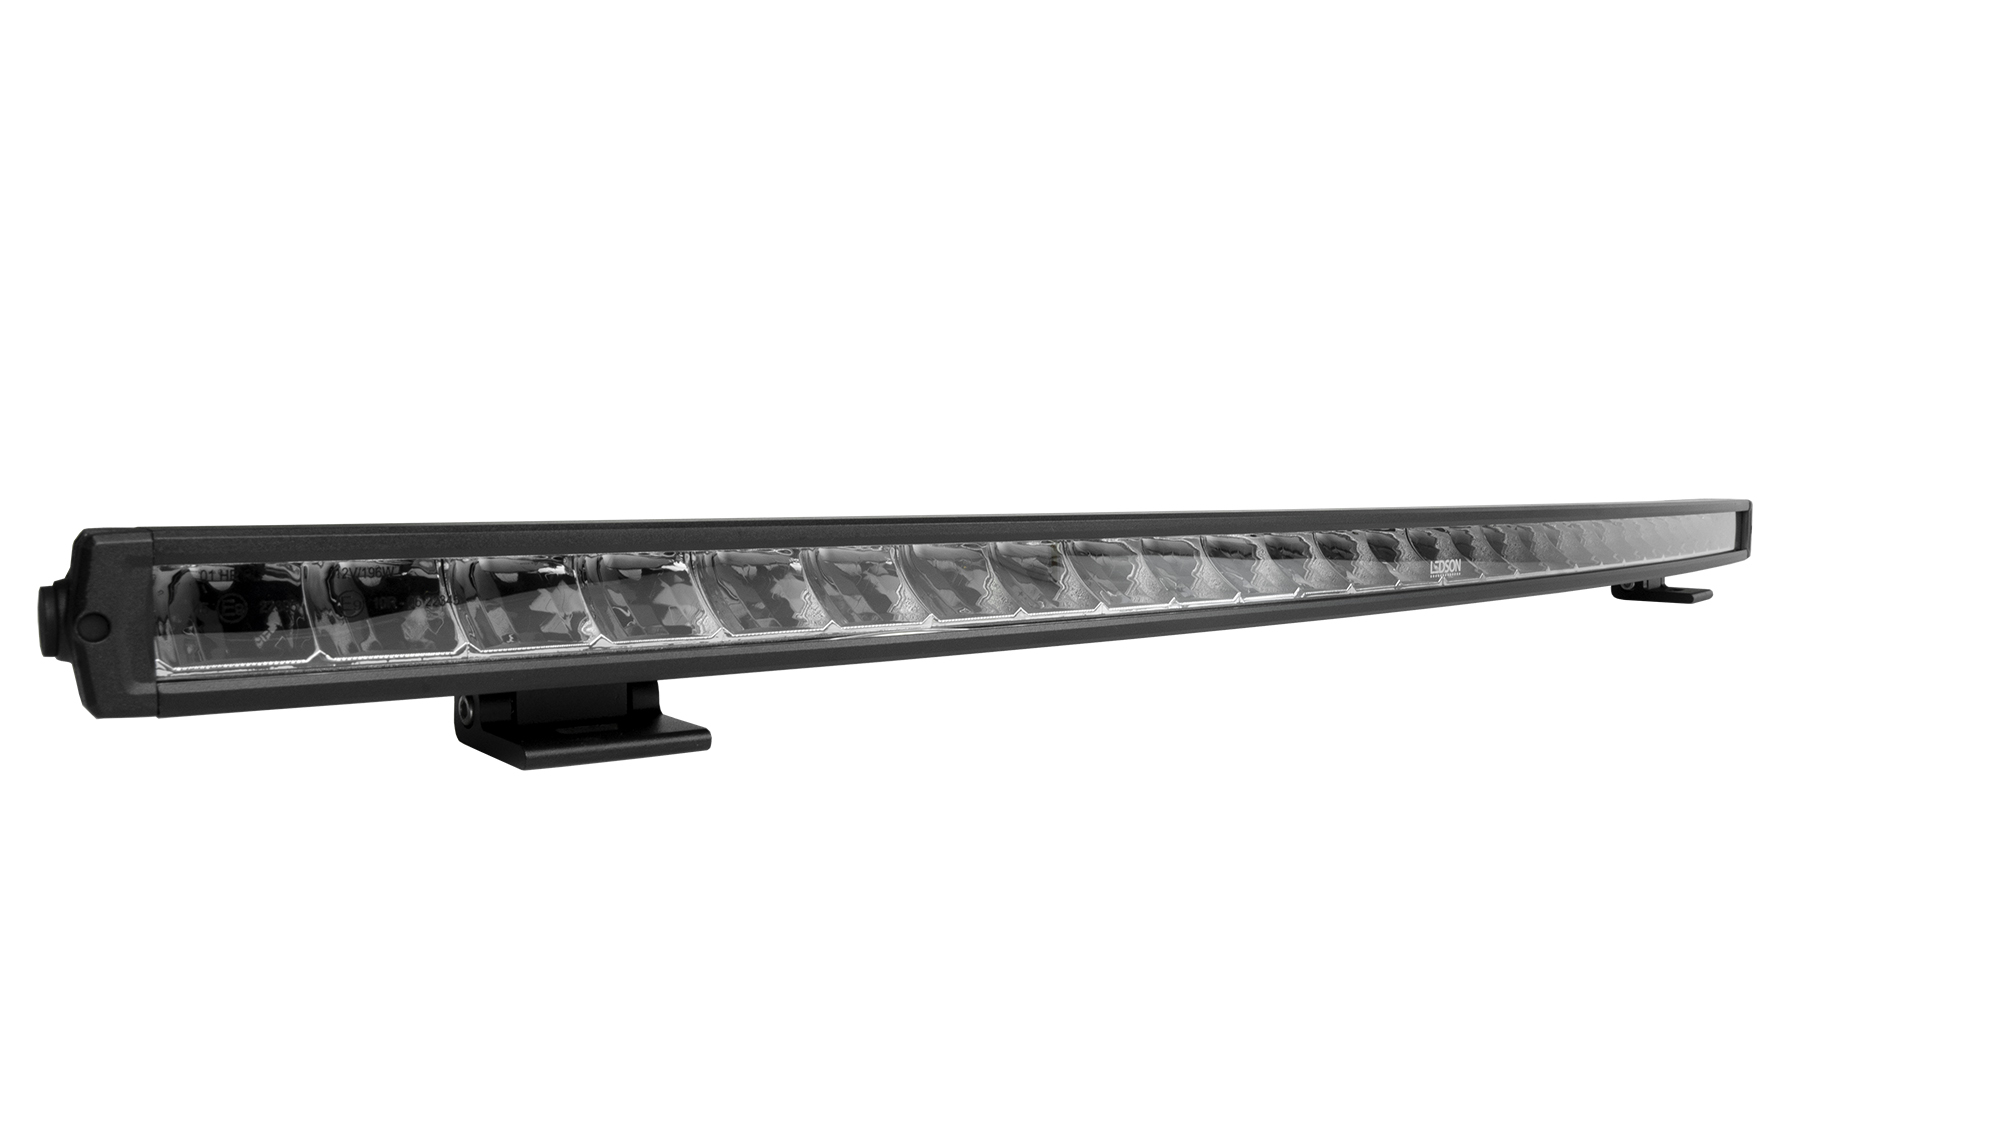 LED-bars 760 (30") - 1270 mm (50") (larger)